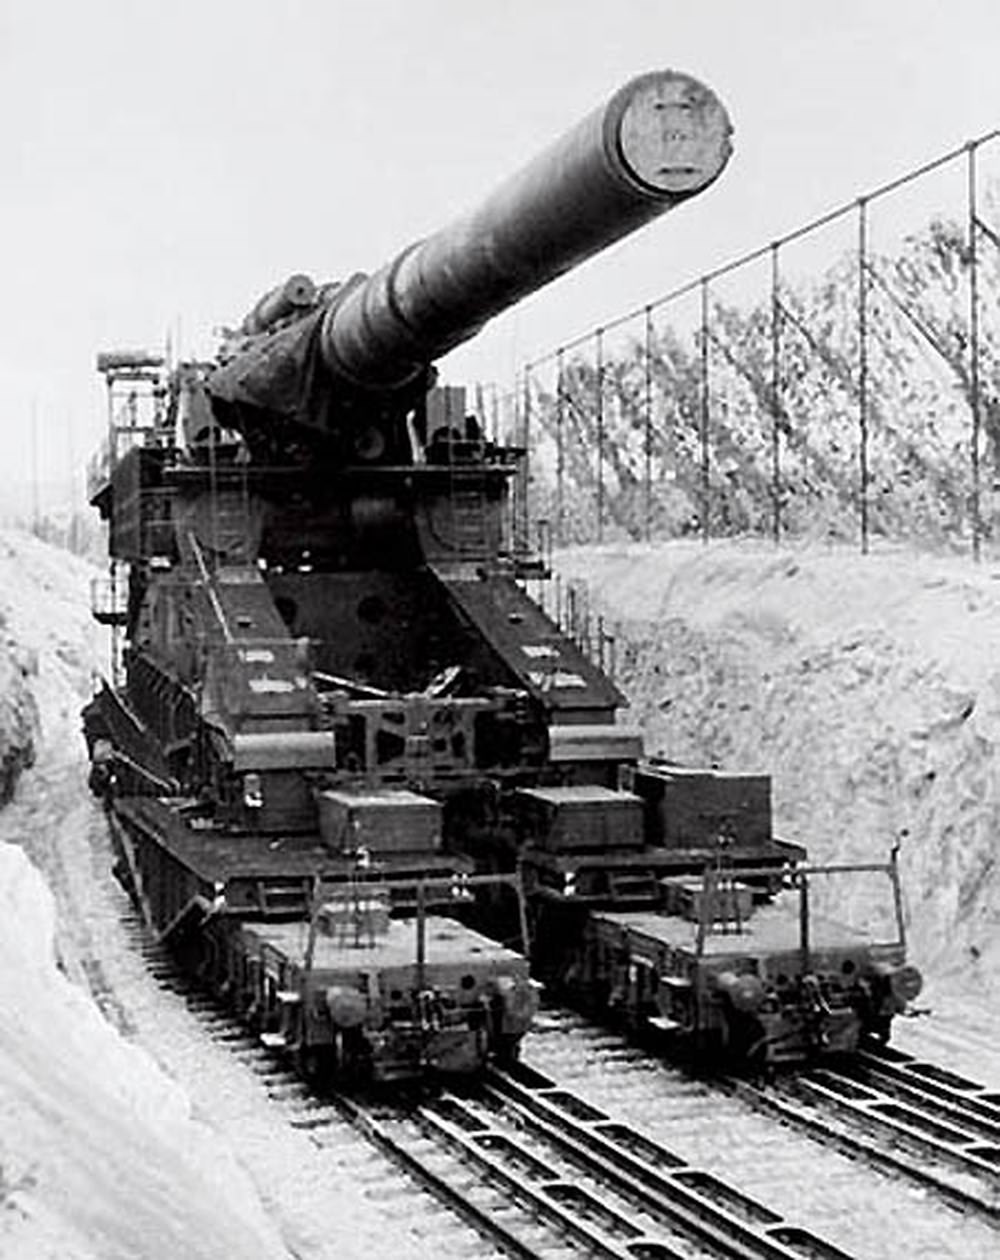 The Gustav Gun: An Astonishing Relic of Nazi Engineering